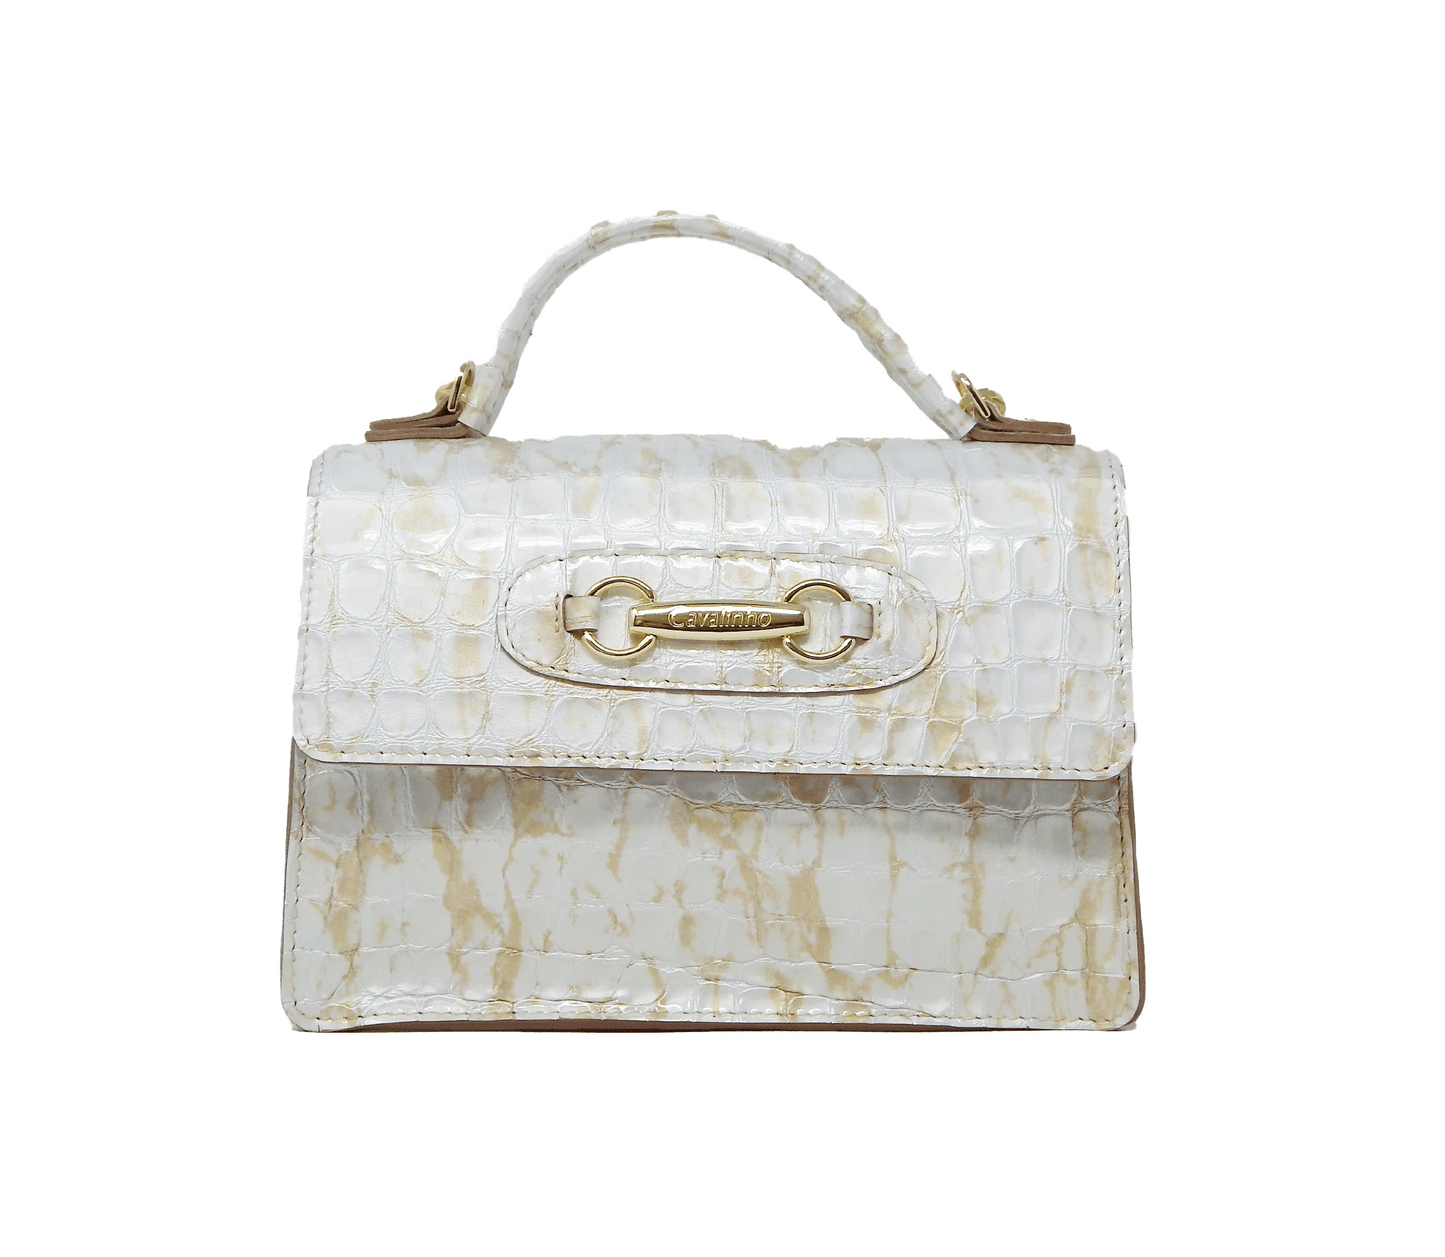 #color_ Beige White | Cavalinho Gallop Patent Leather Handbag - Beige White - 18170517.31_1